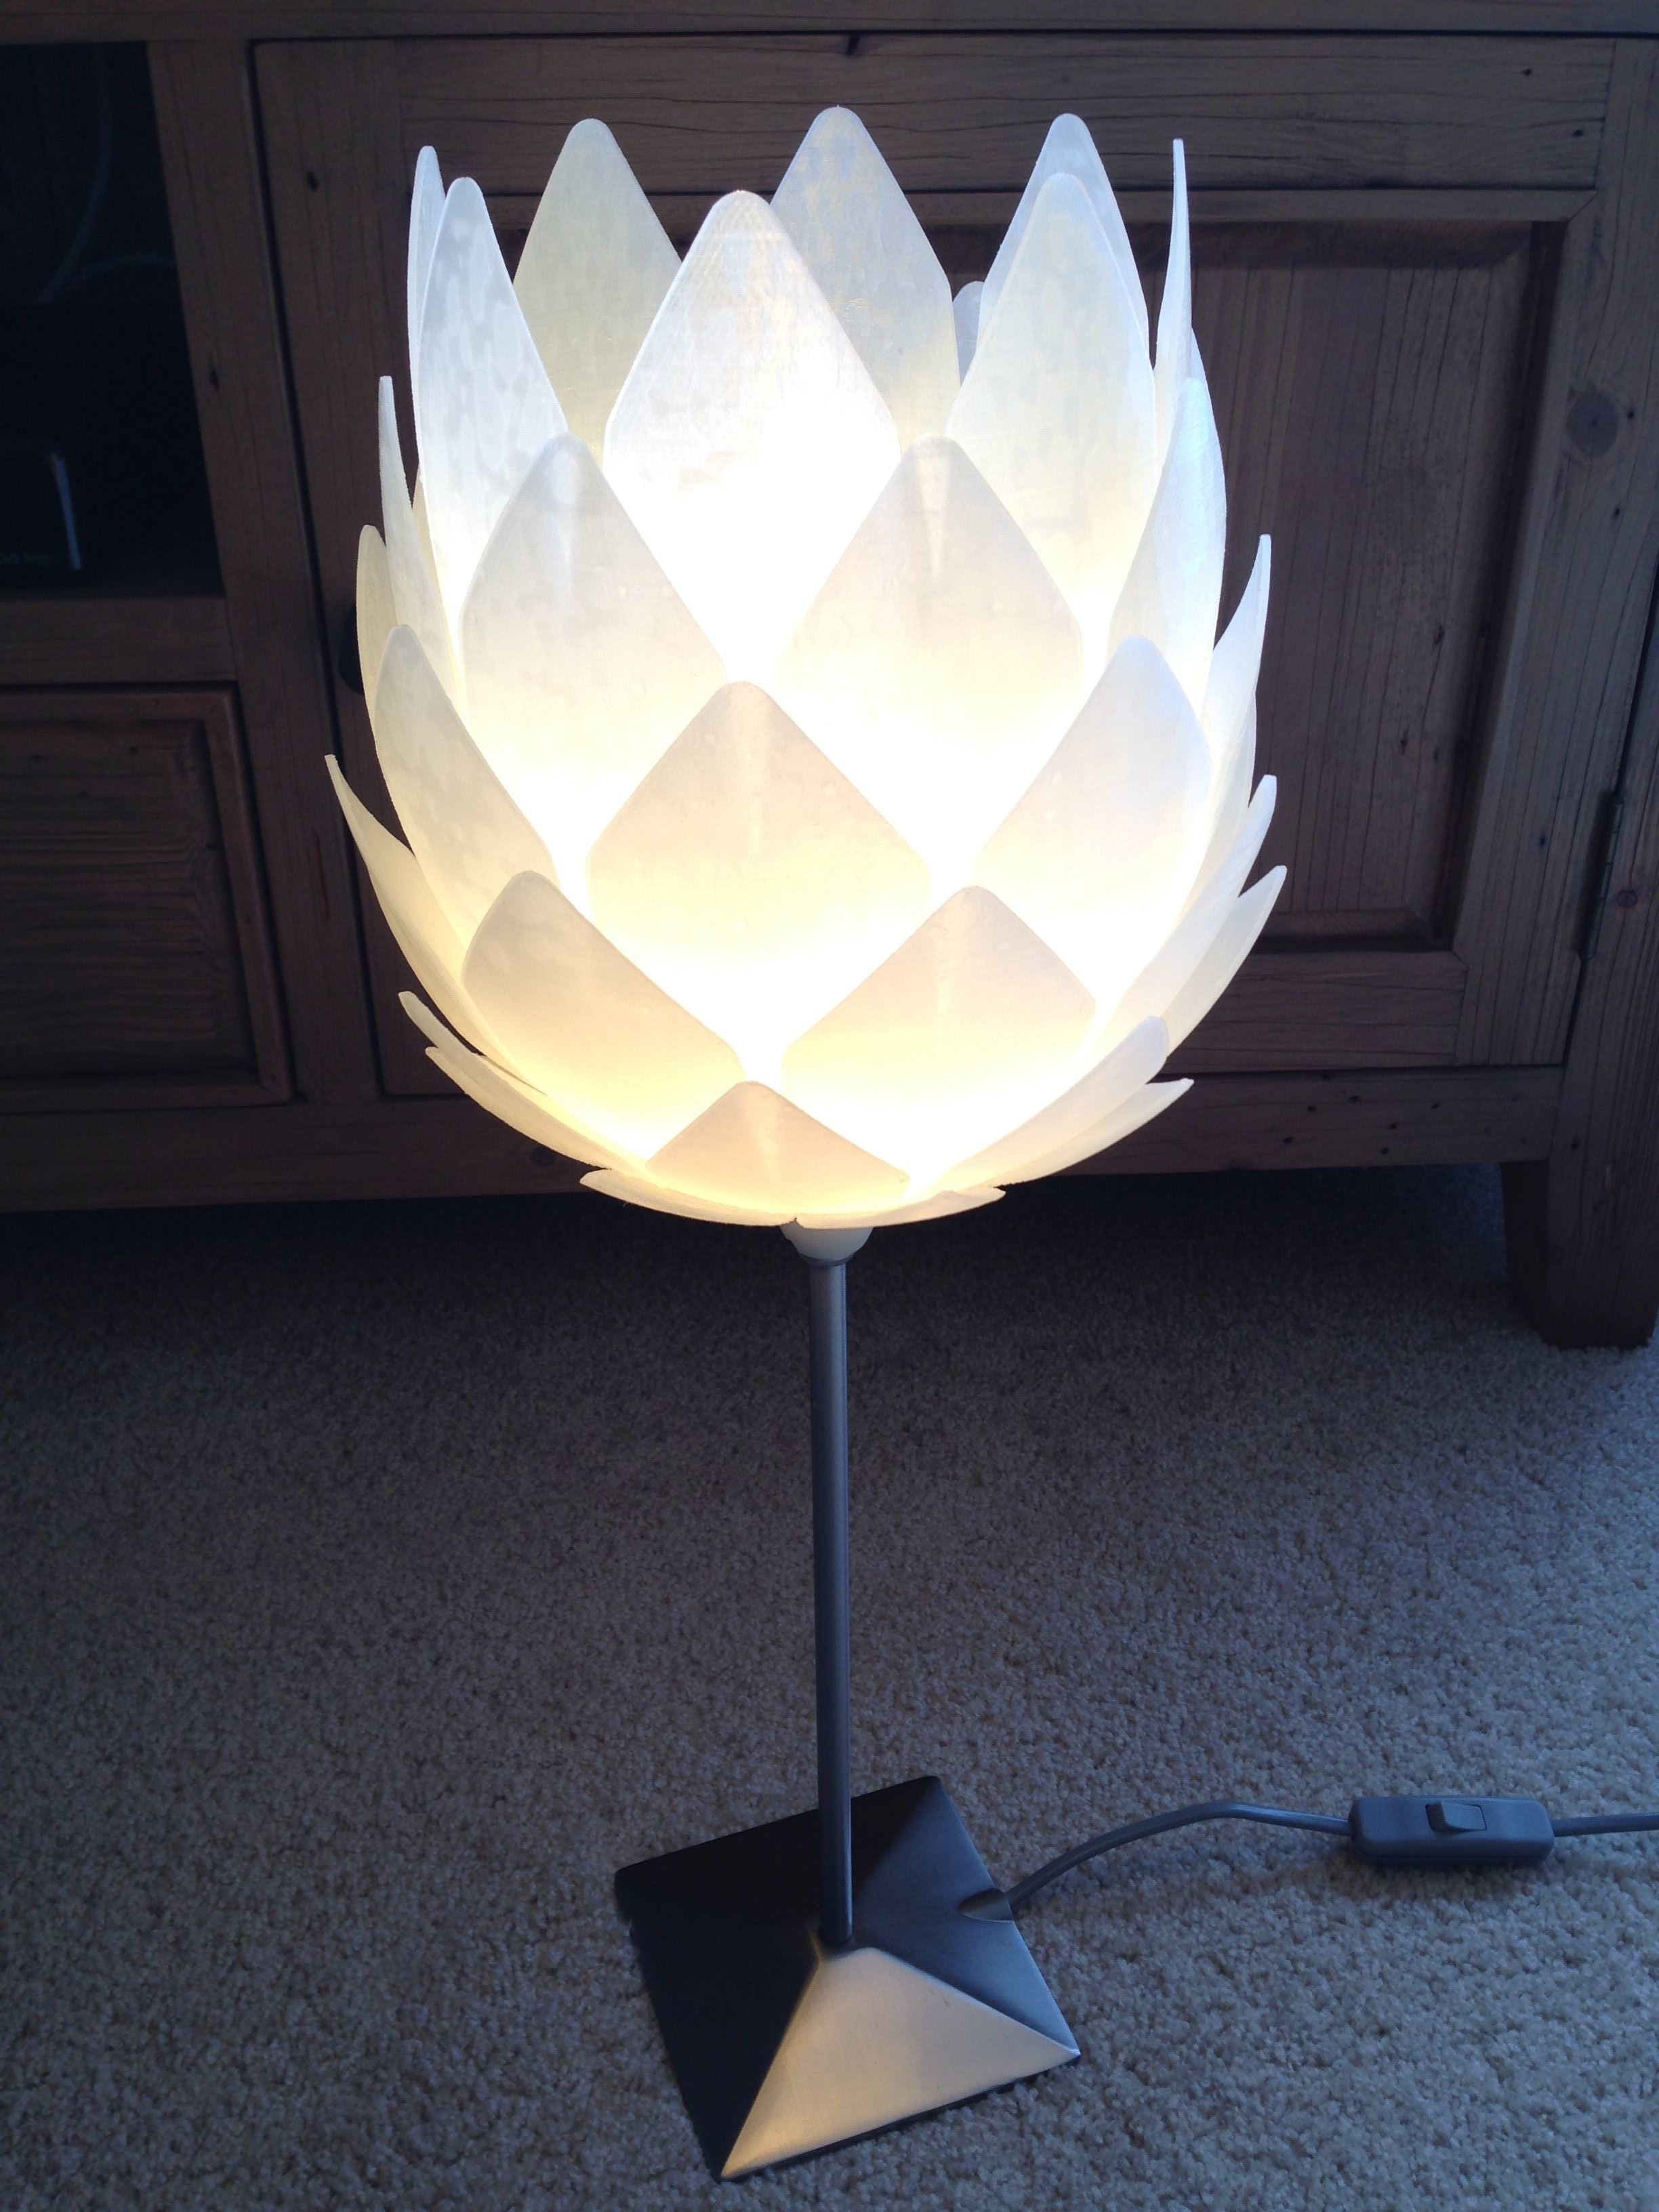 3D Printed Pineapple Light